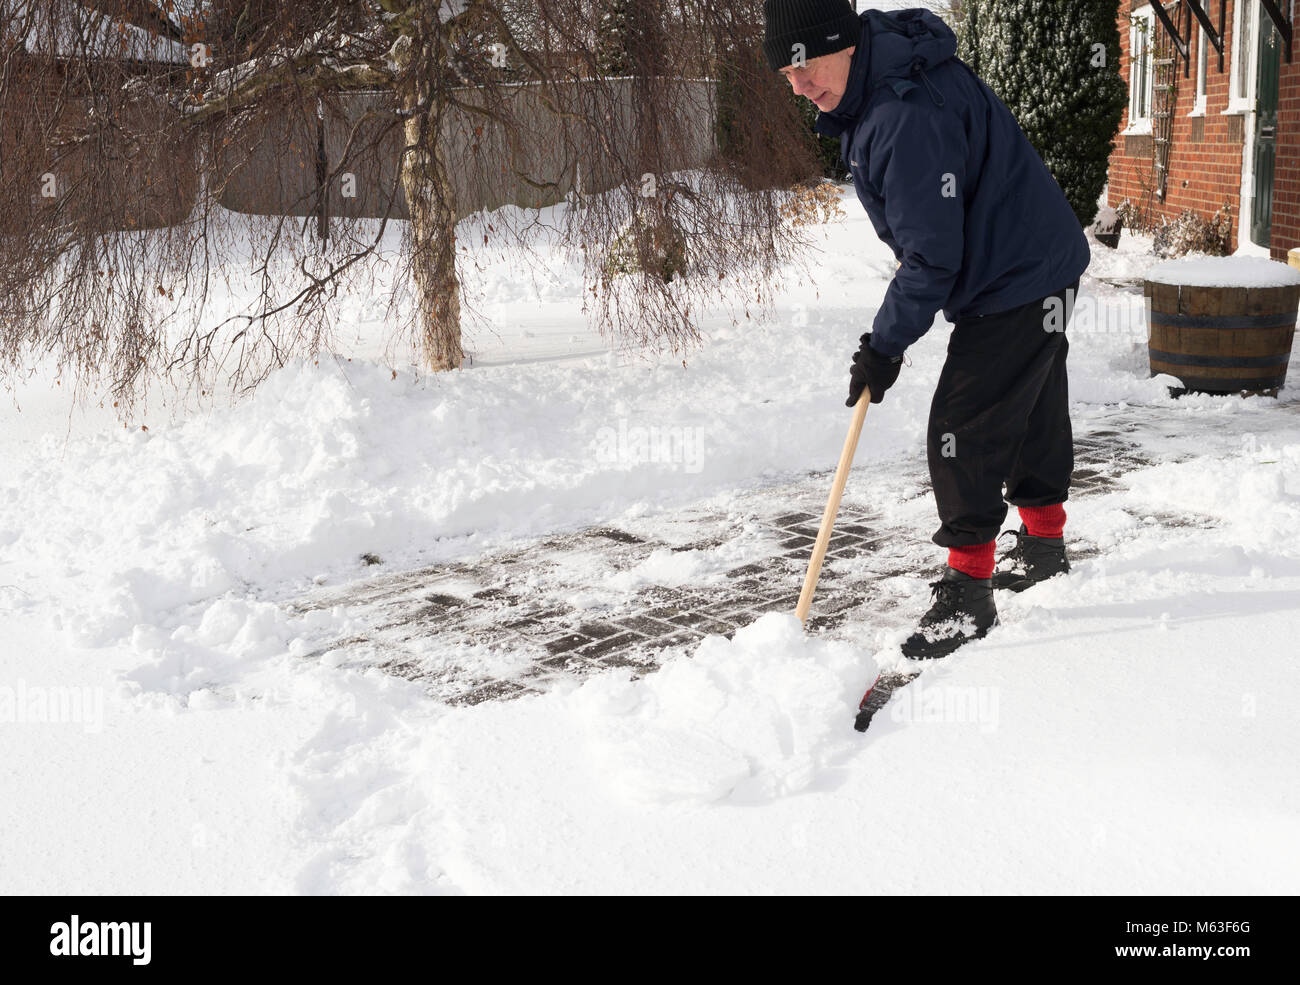 Washington, UK. 28th February 2018. Man clearing path after heavy overnight snow. Washington, Tyne and Wear. England, (c) Washington Imaging/Alamy Live News Stock Photo